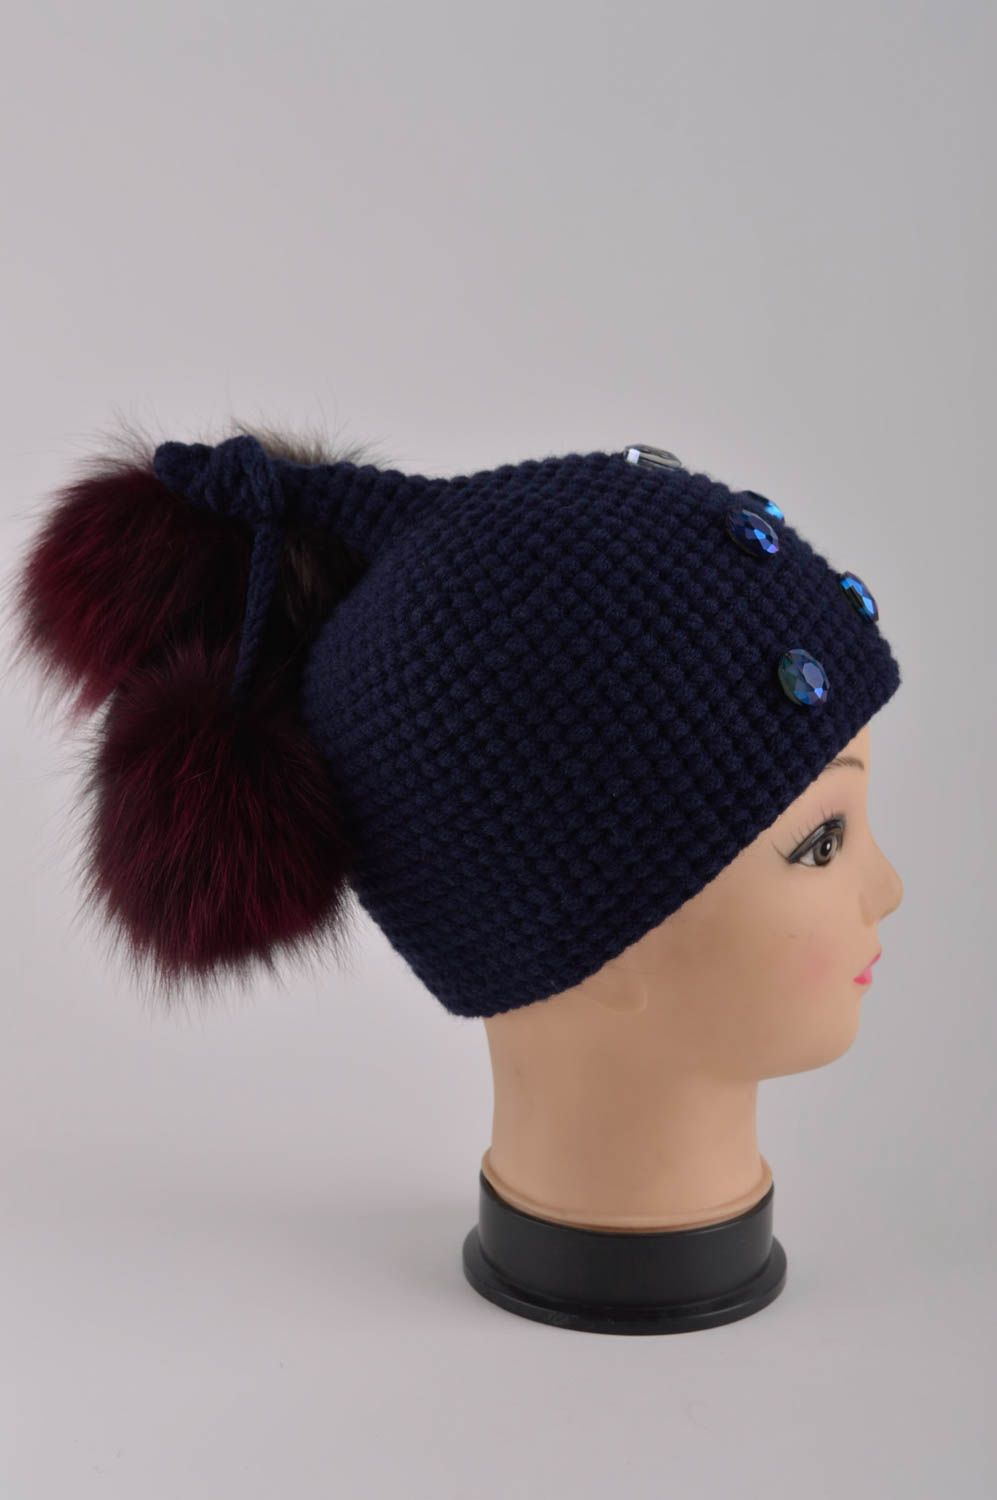 Handmade ladies hat fashion accessories ladies winter hat warm hat gifts for her photo 4